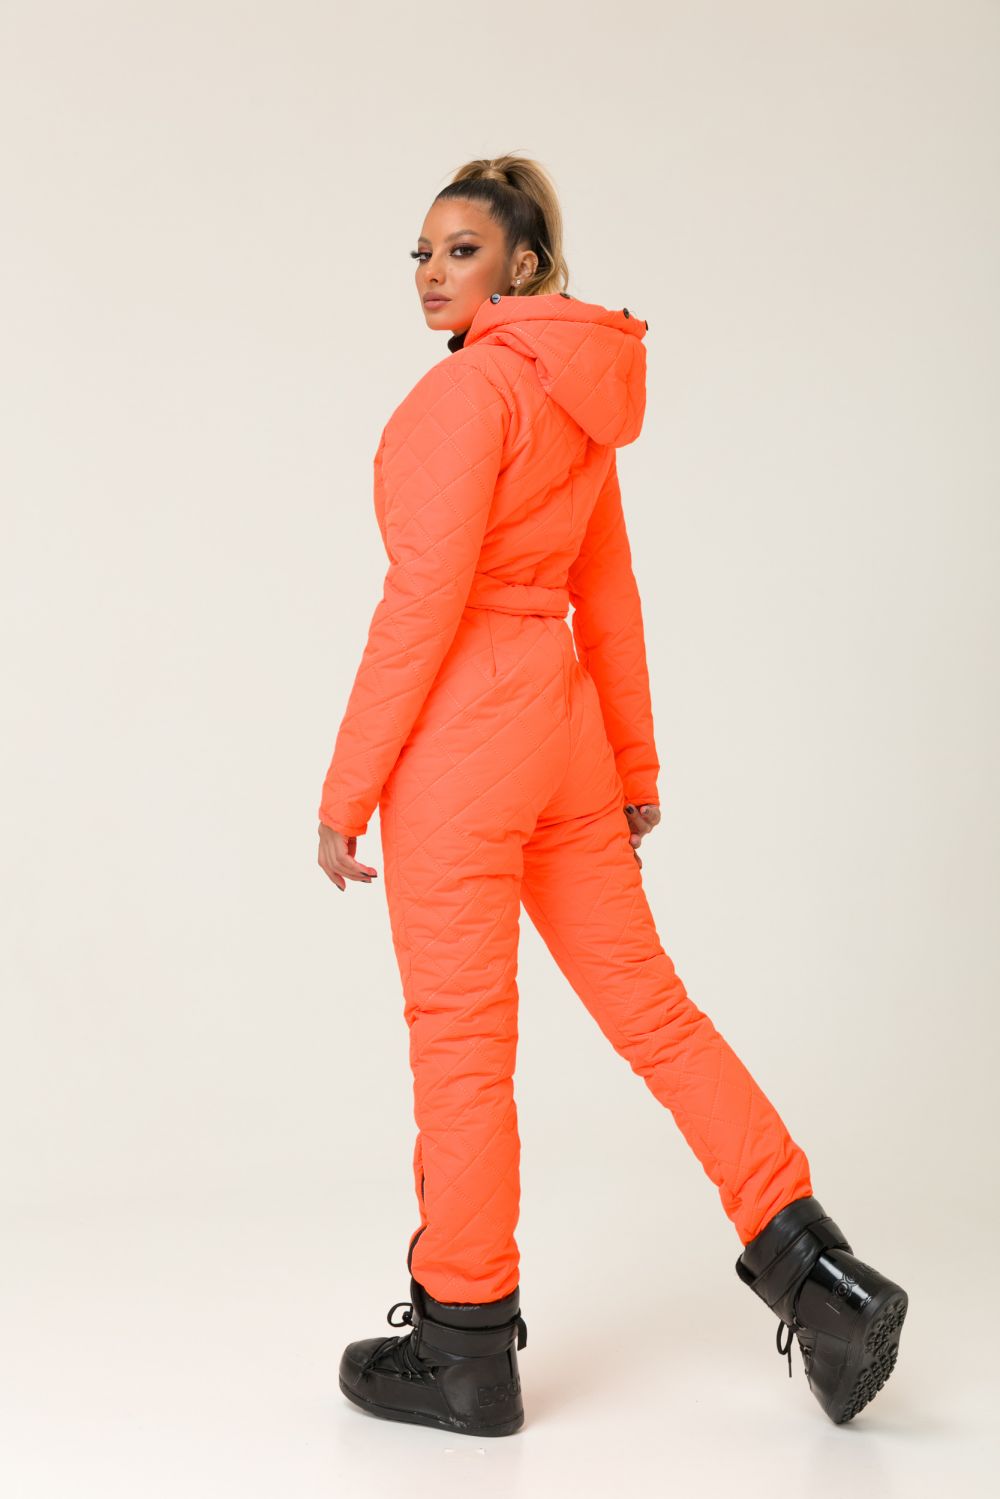 Neon orange casual ski jumpsuit Yvels Bogas